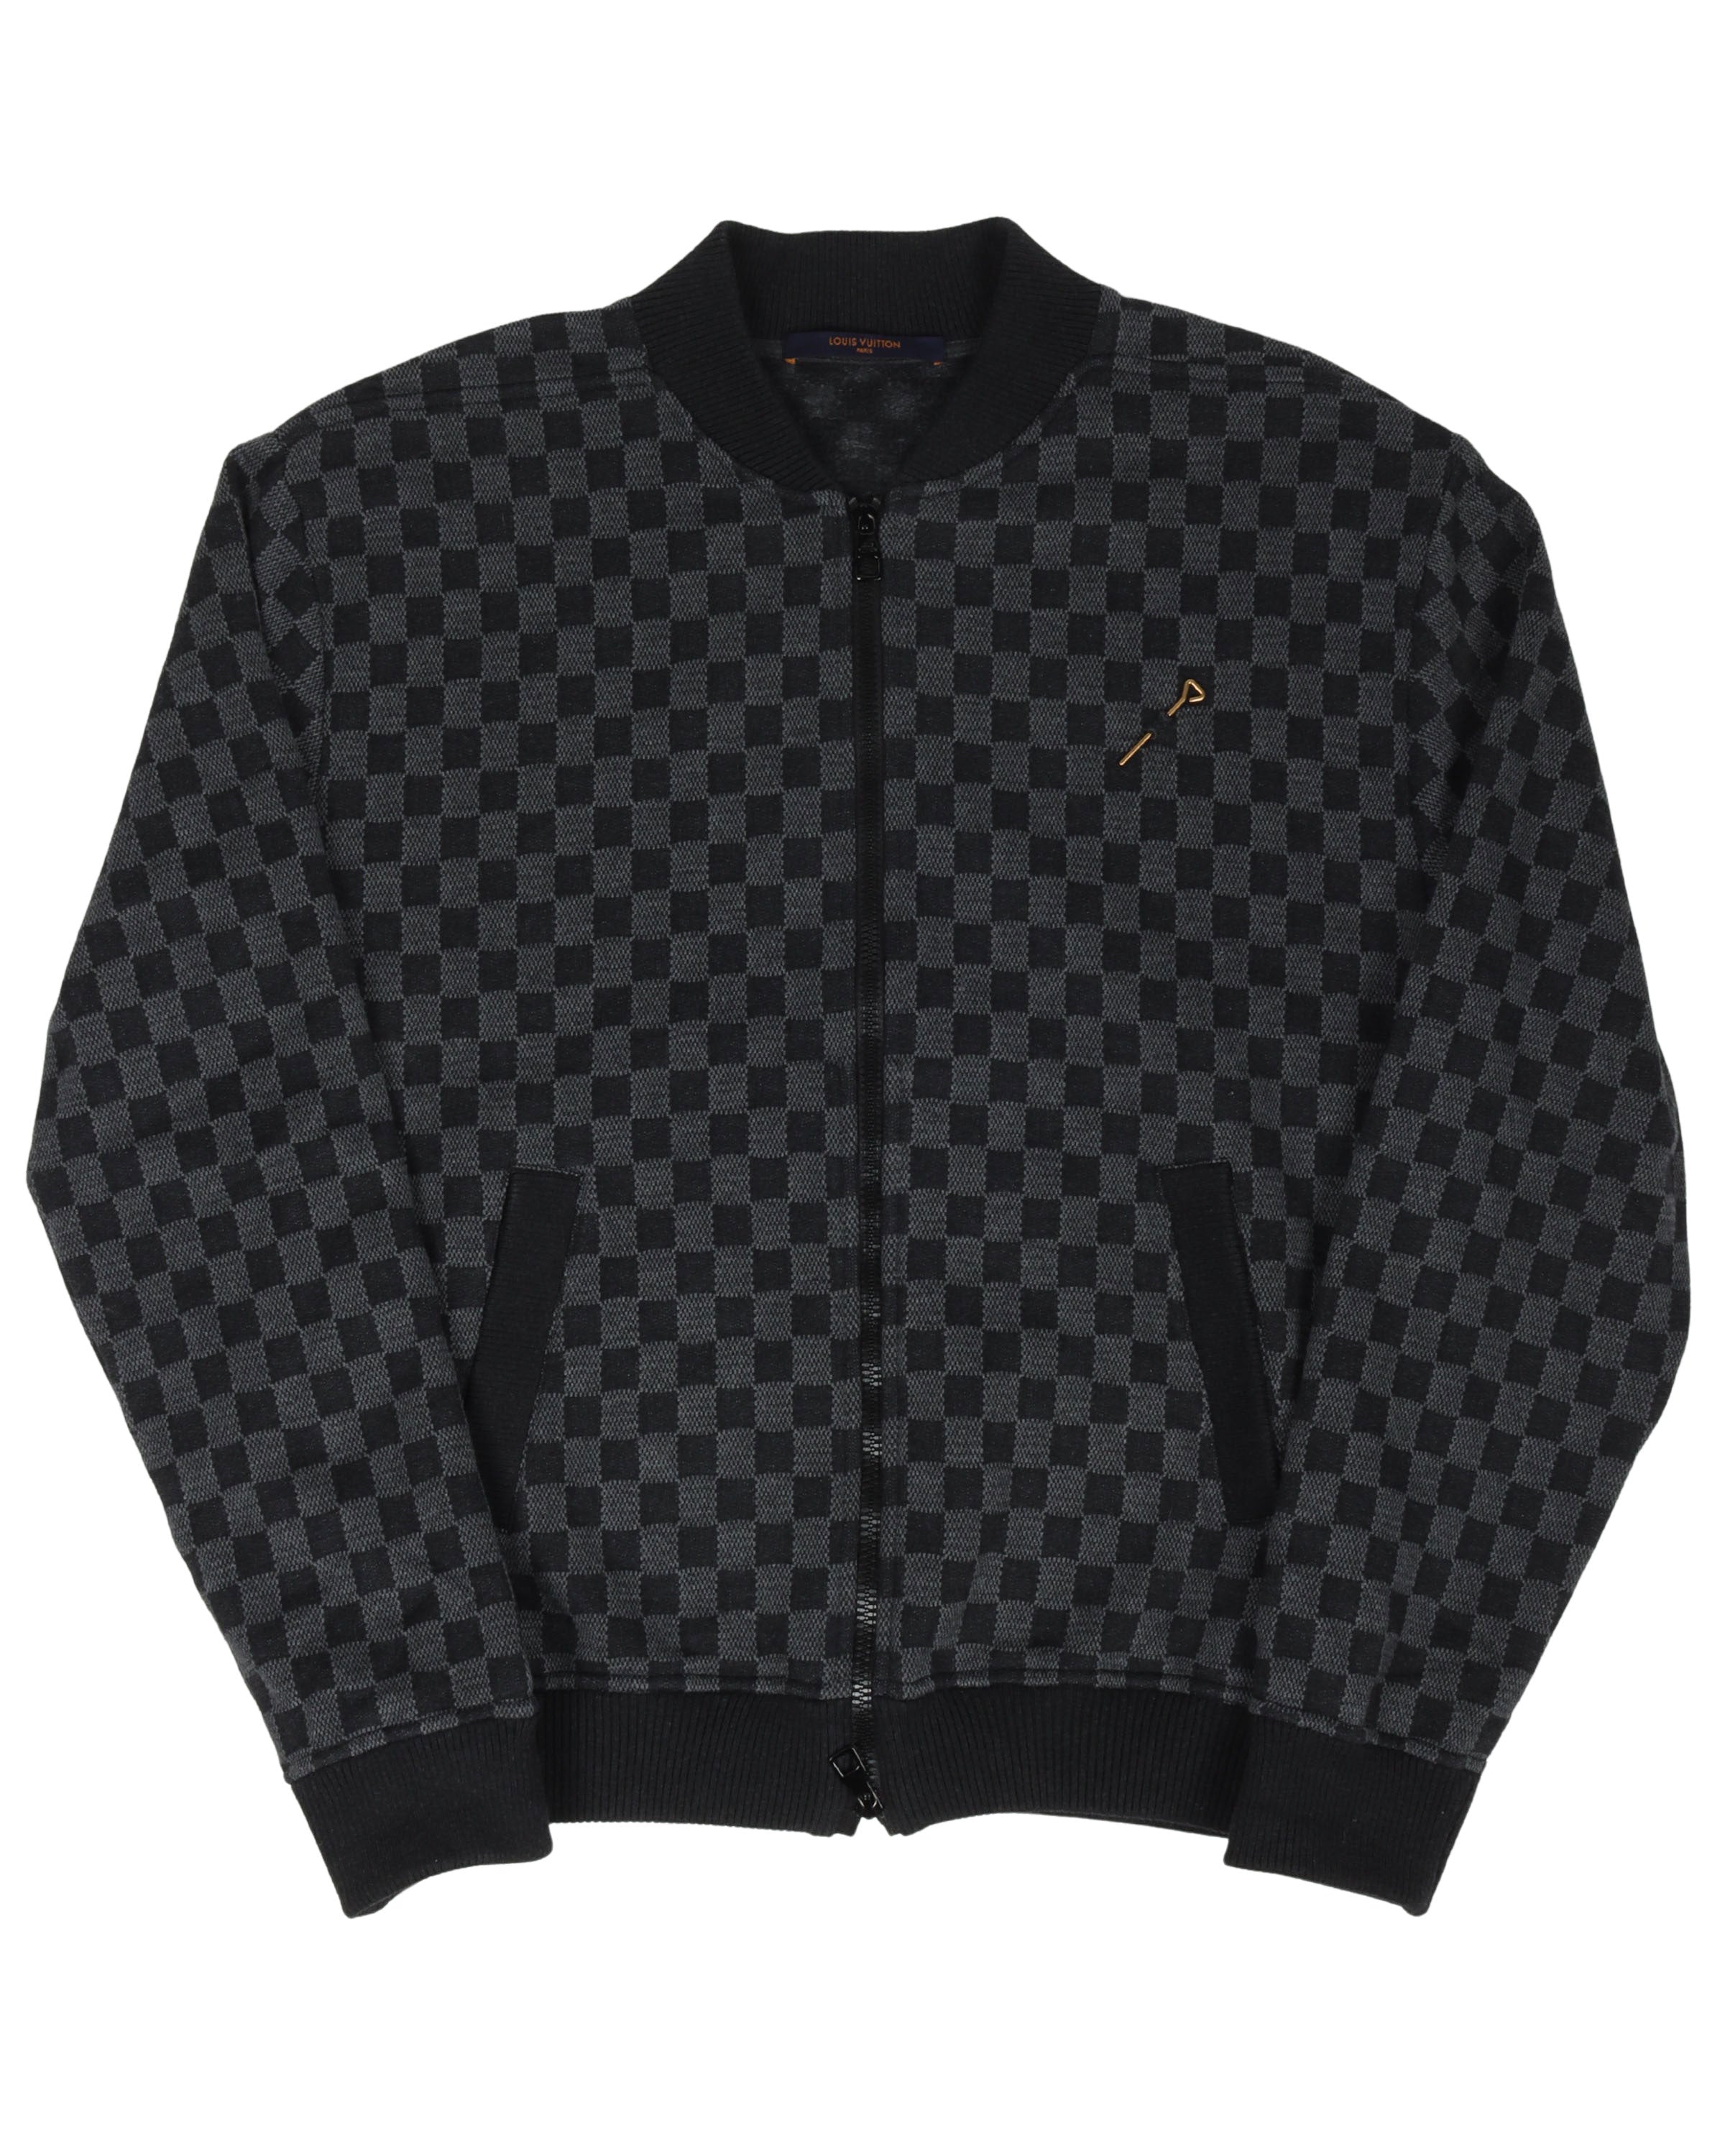 Louis Vuitton, Jackets & Coats, Vintage Lv Bomber Jacket